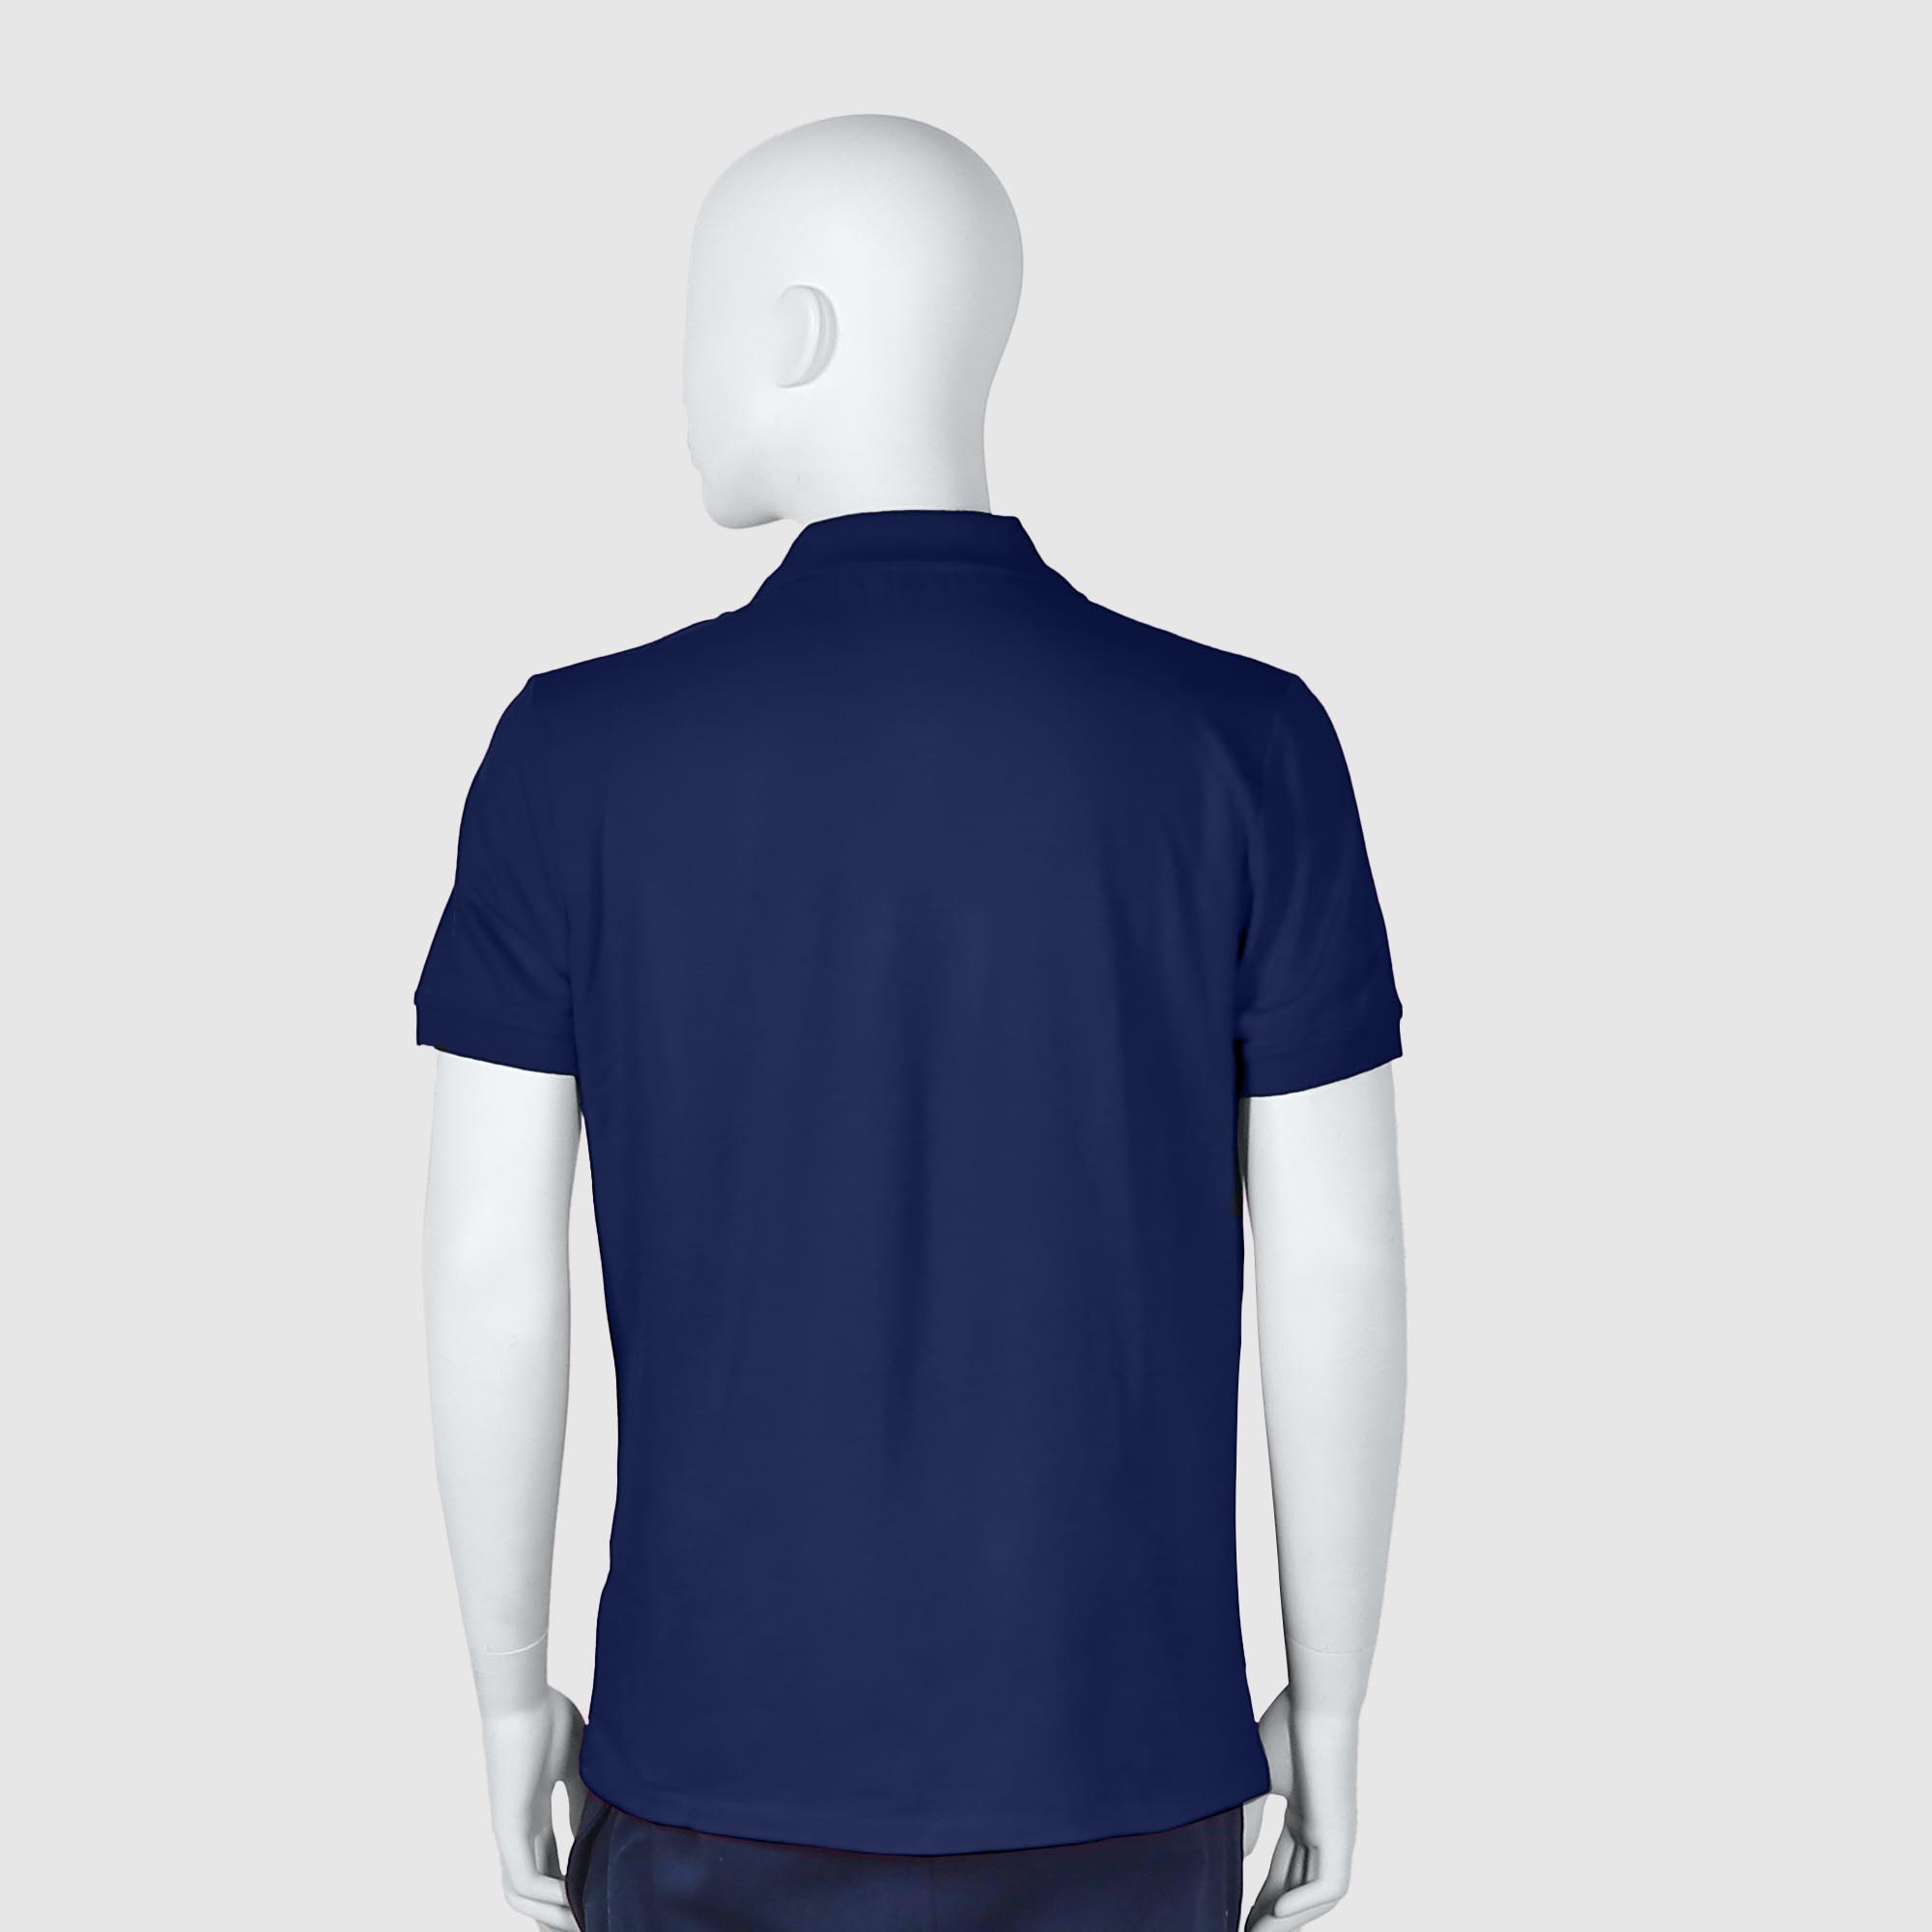 Мужская футболка-поло Diva Teks синяя (DTD-10), цвет синий, размер 46-48 - фото 2